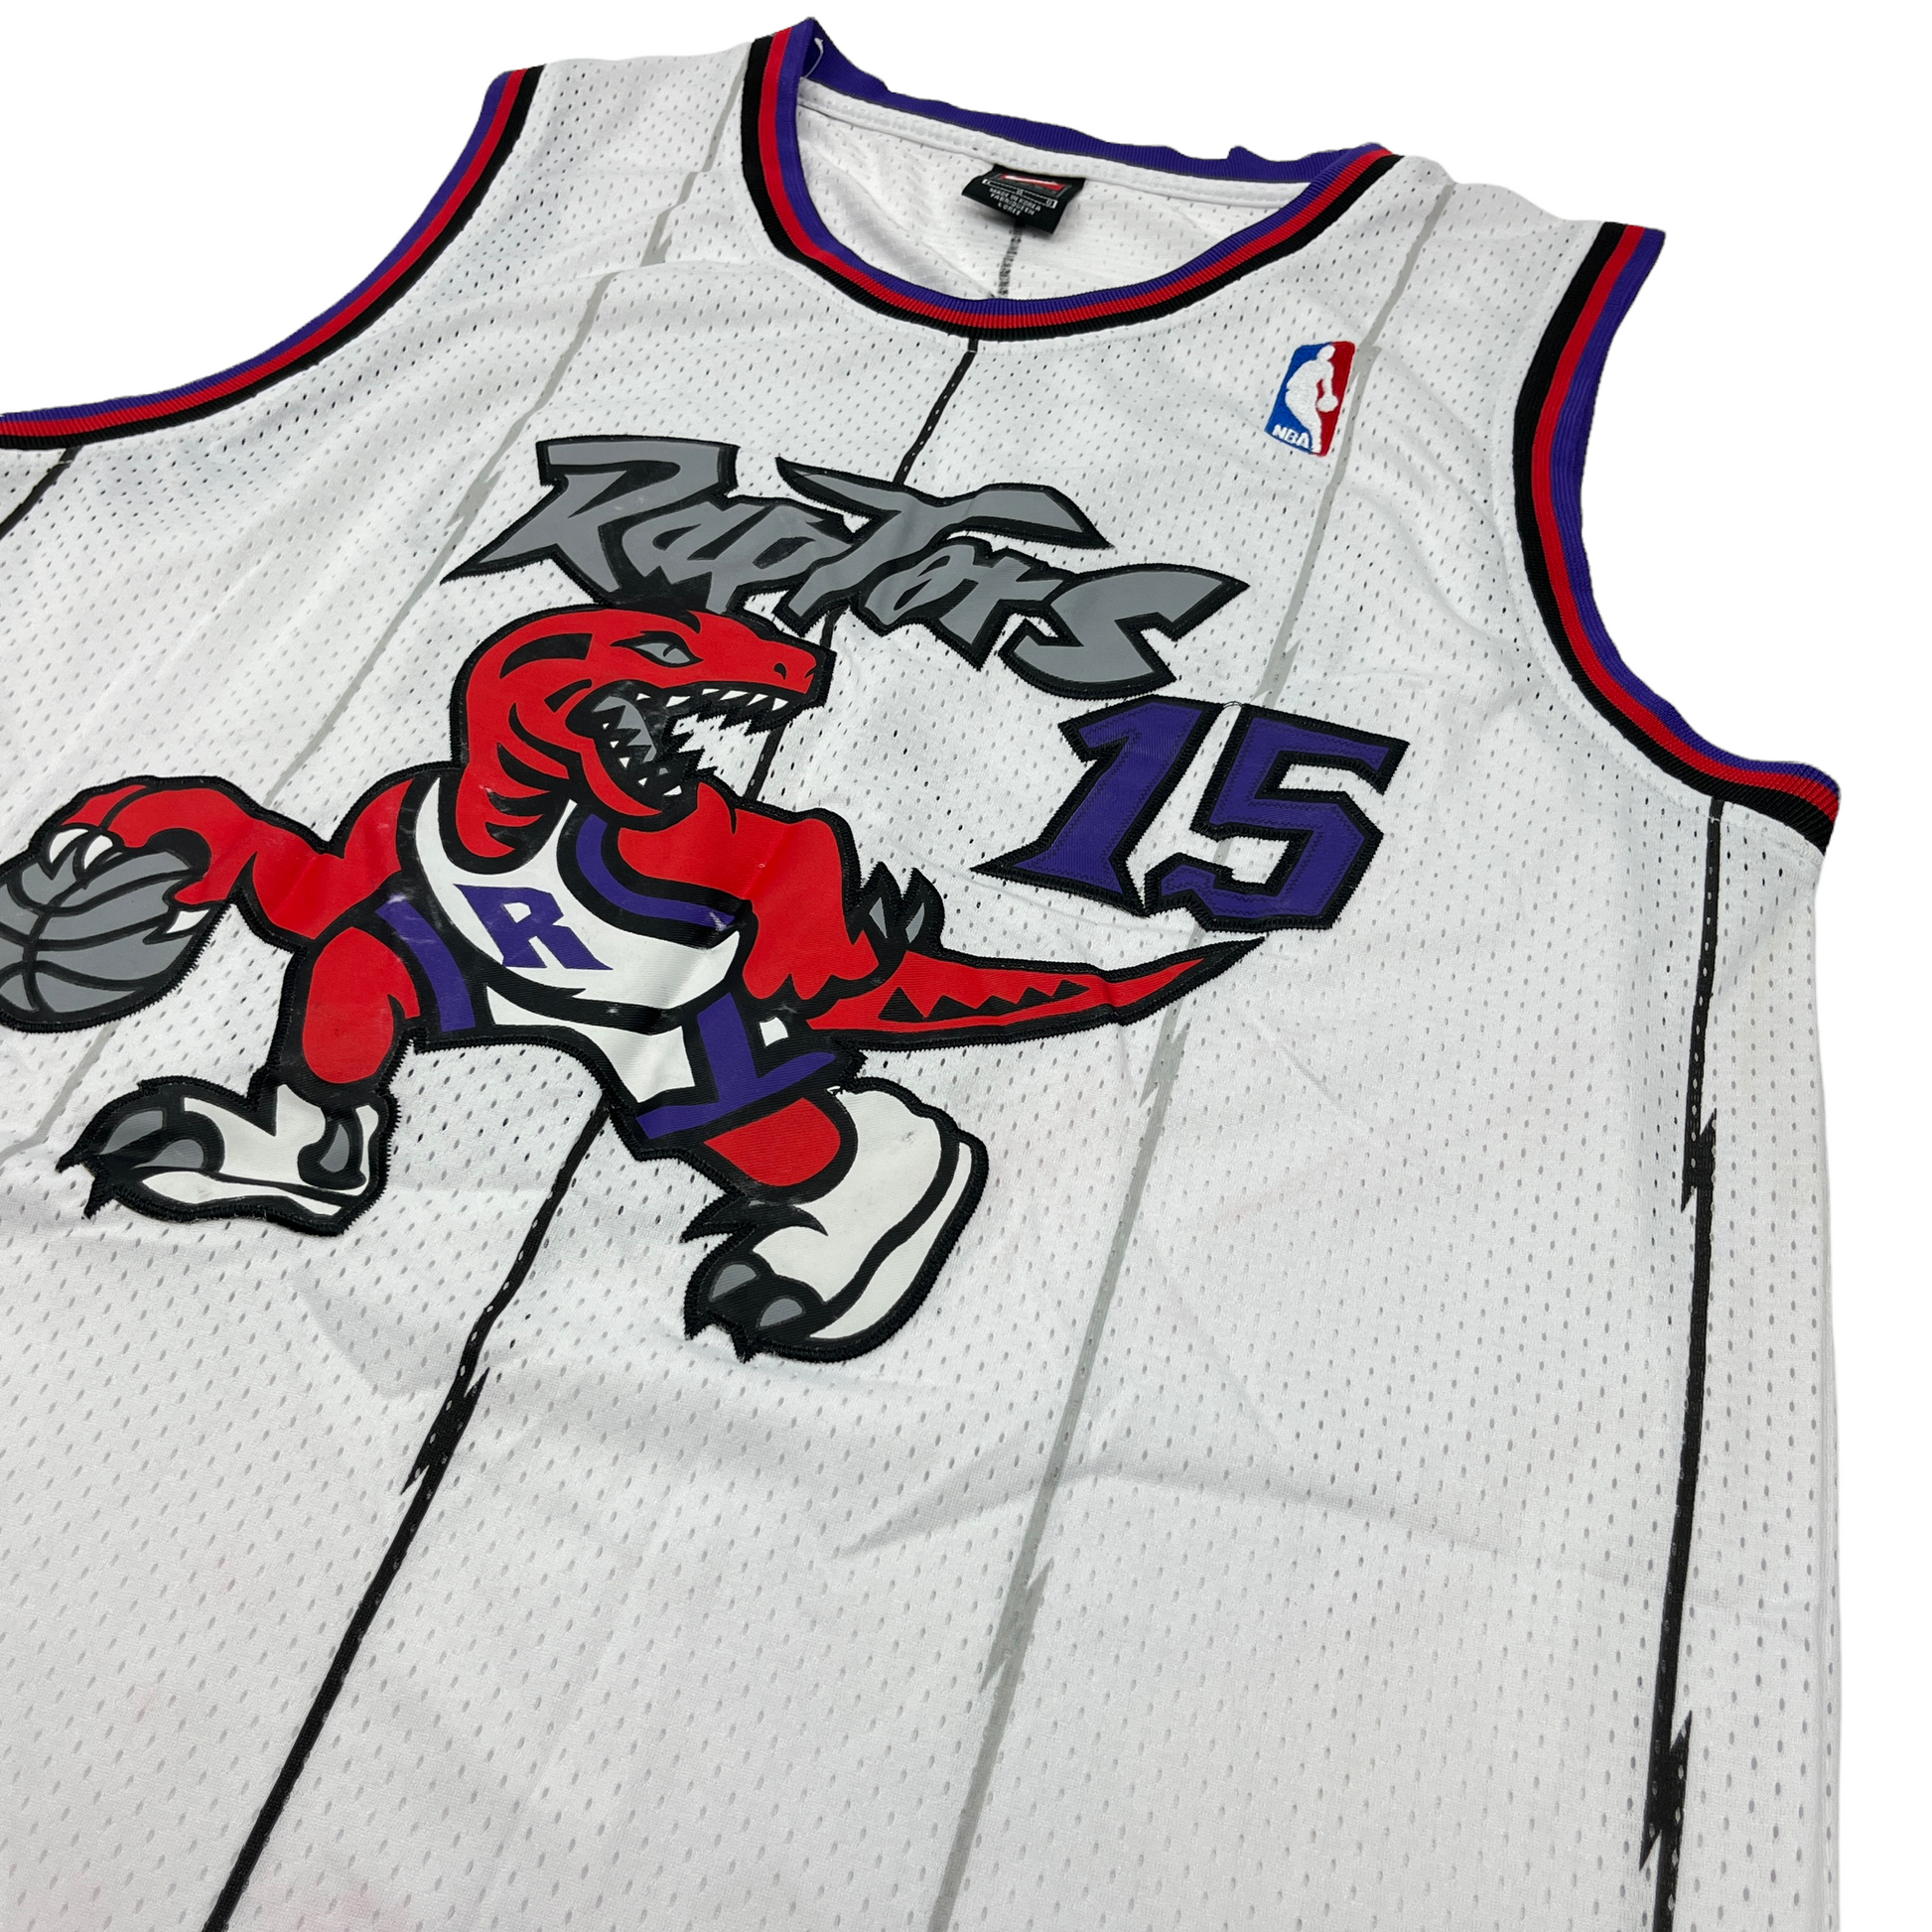 Nike Vince Carter Toronto Raptors NBA Jerseys for sale